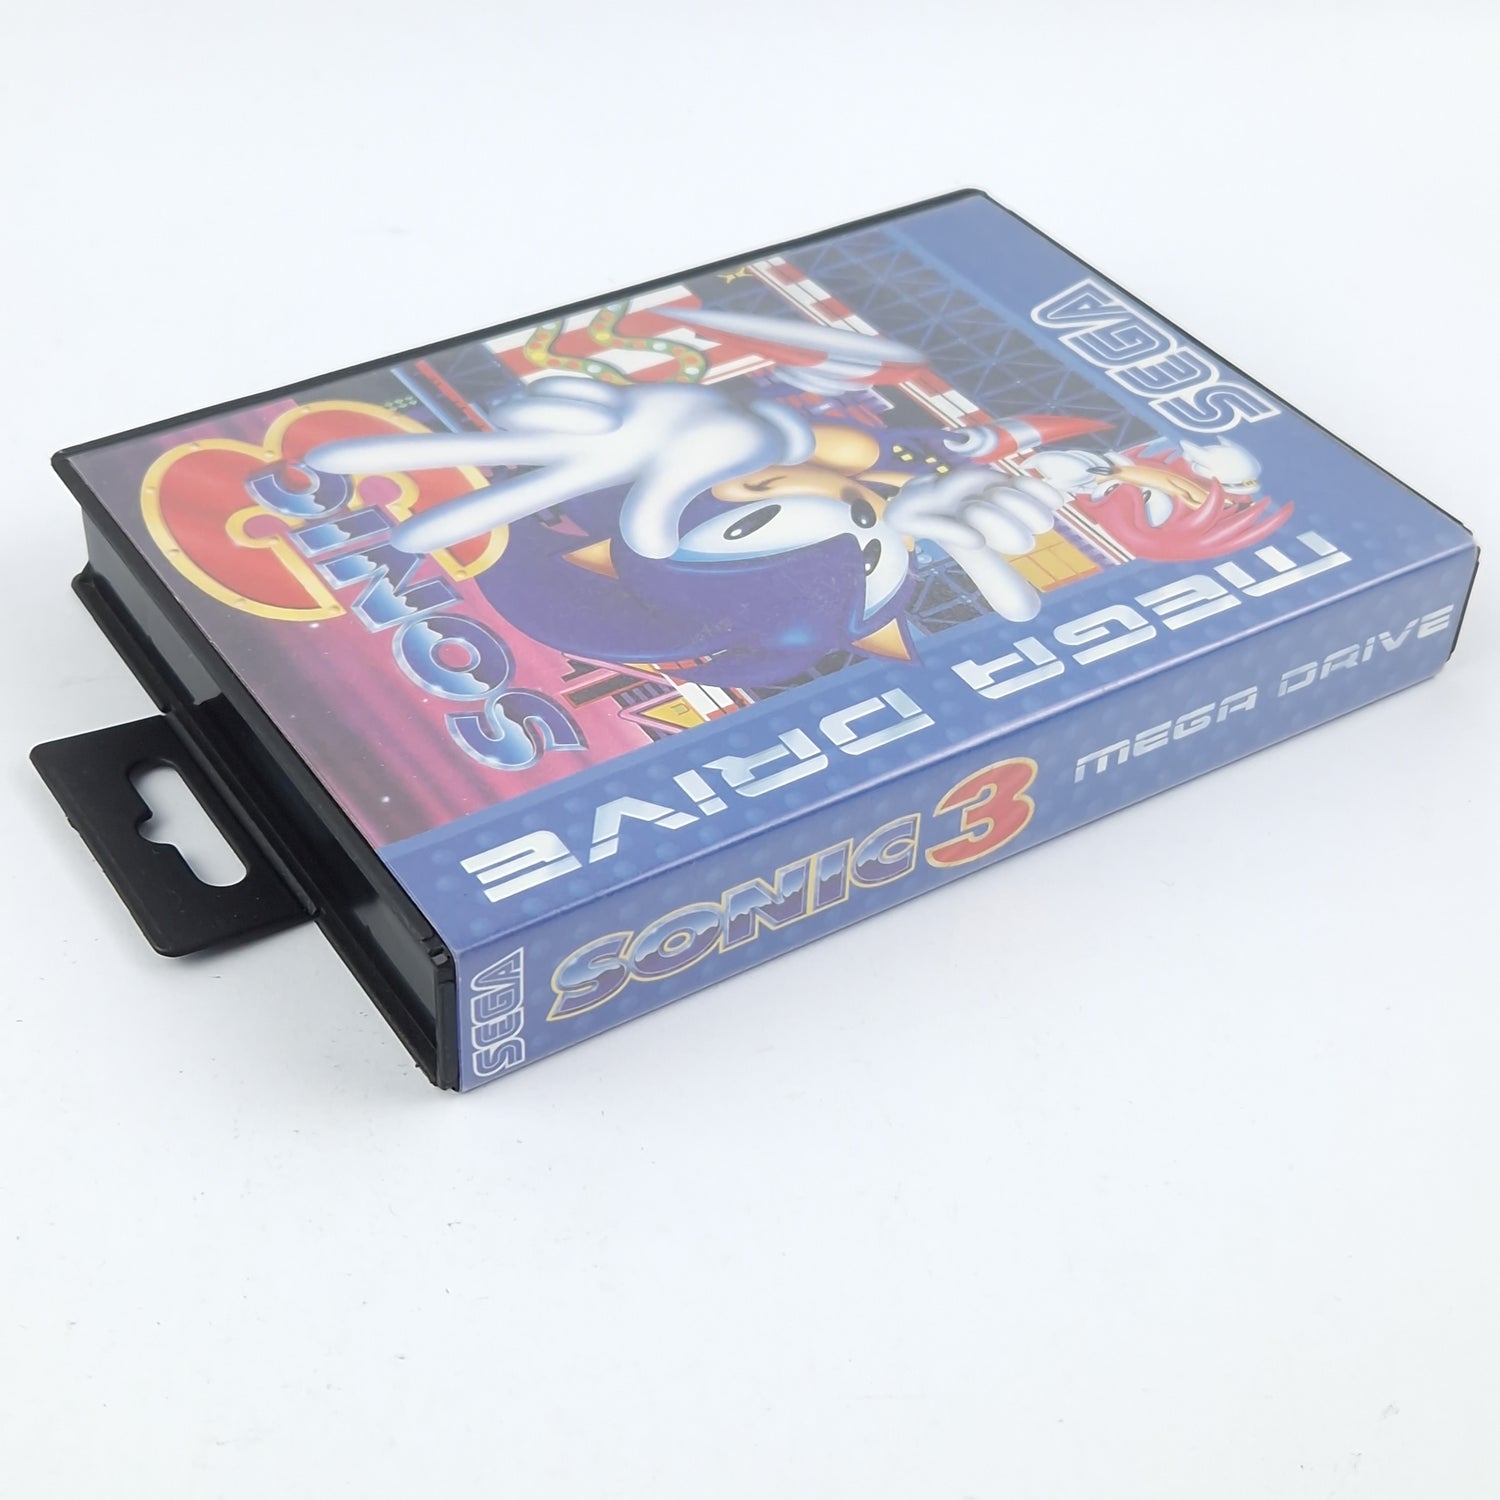 Sega Mega Drive Game: Sonic The Hedgehog 3 - Module Instructions OVP cib / PAL MD